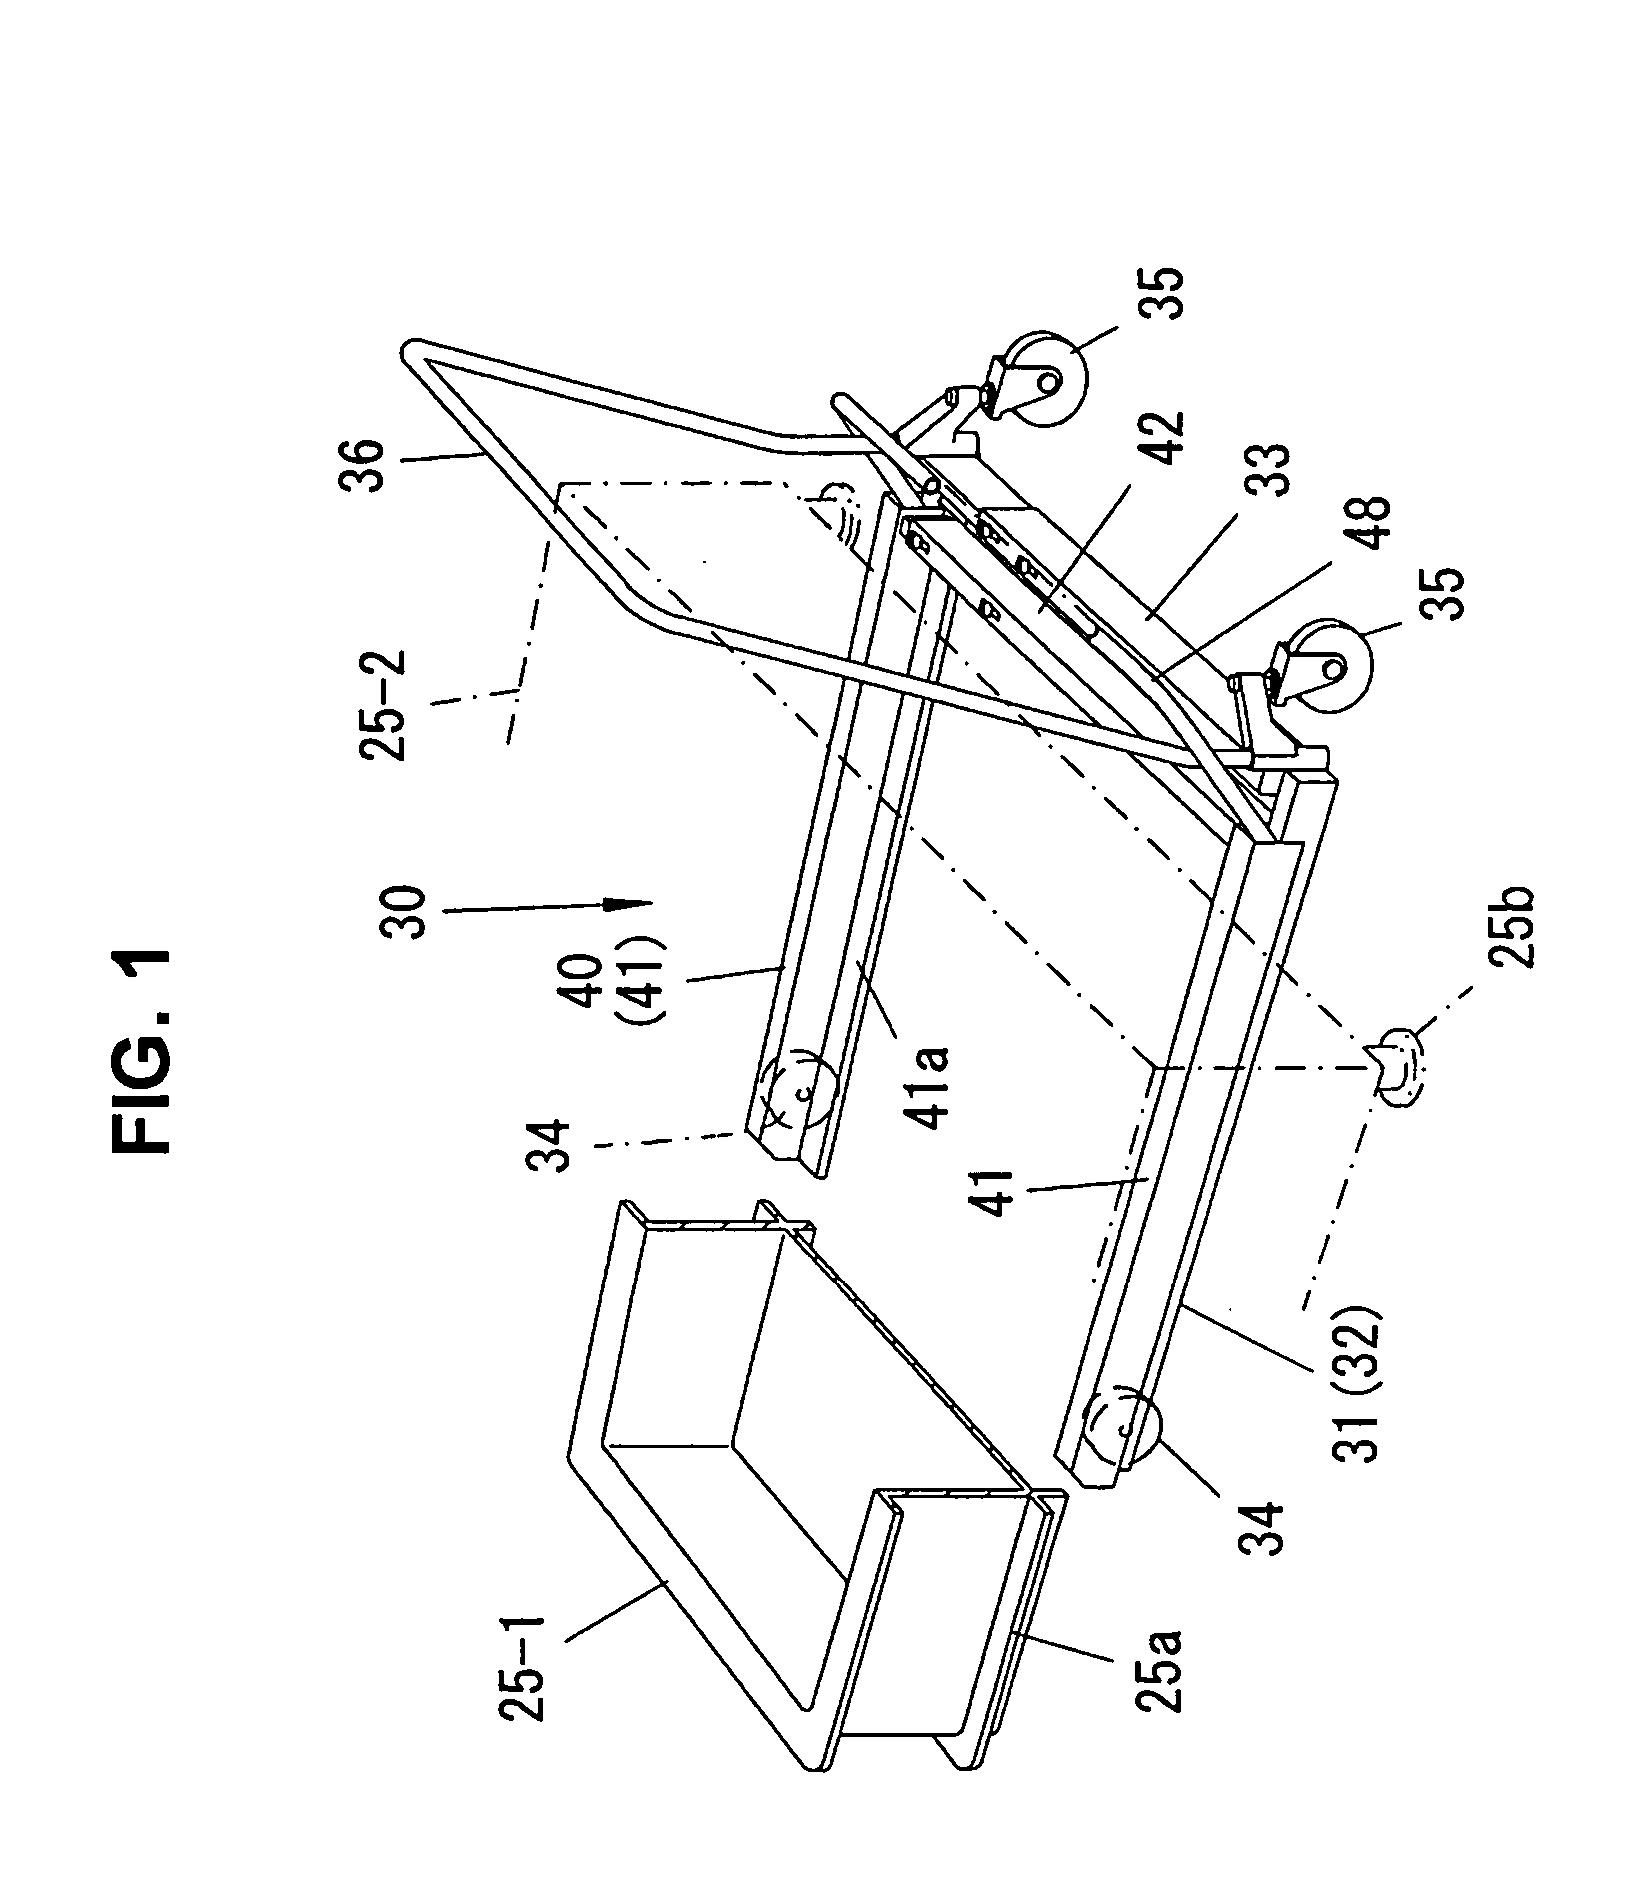 Locking apparatus of truck with hoist